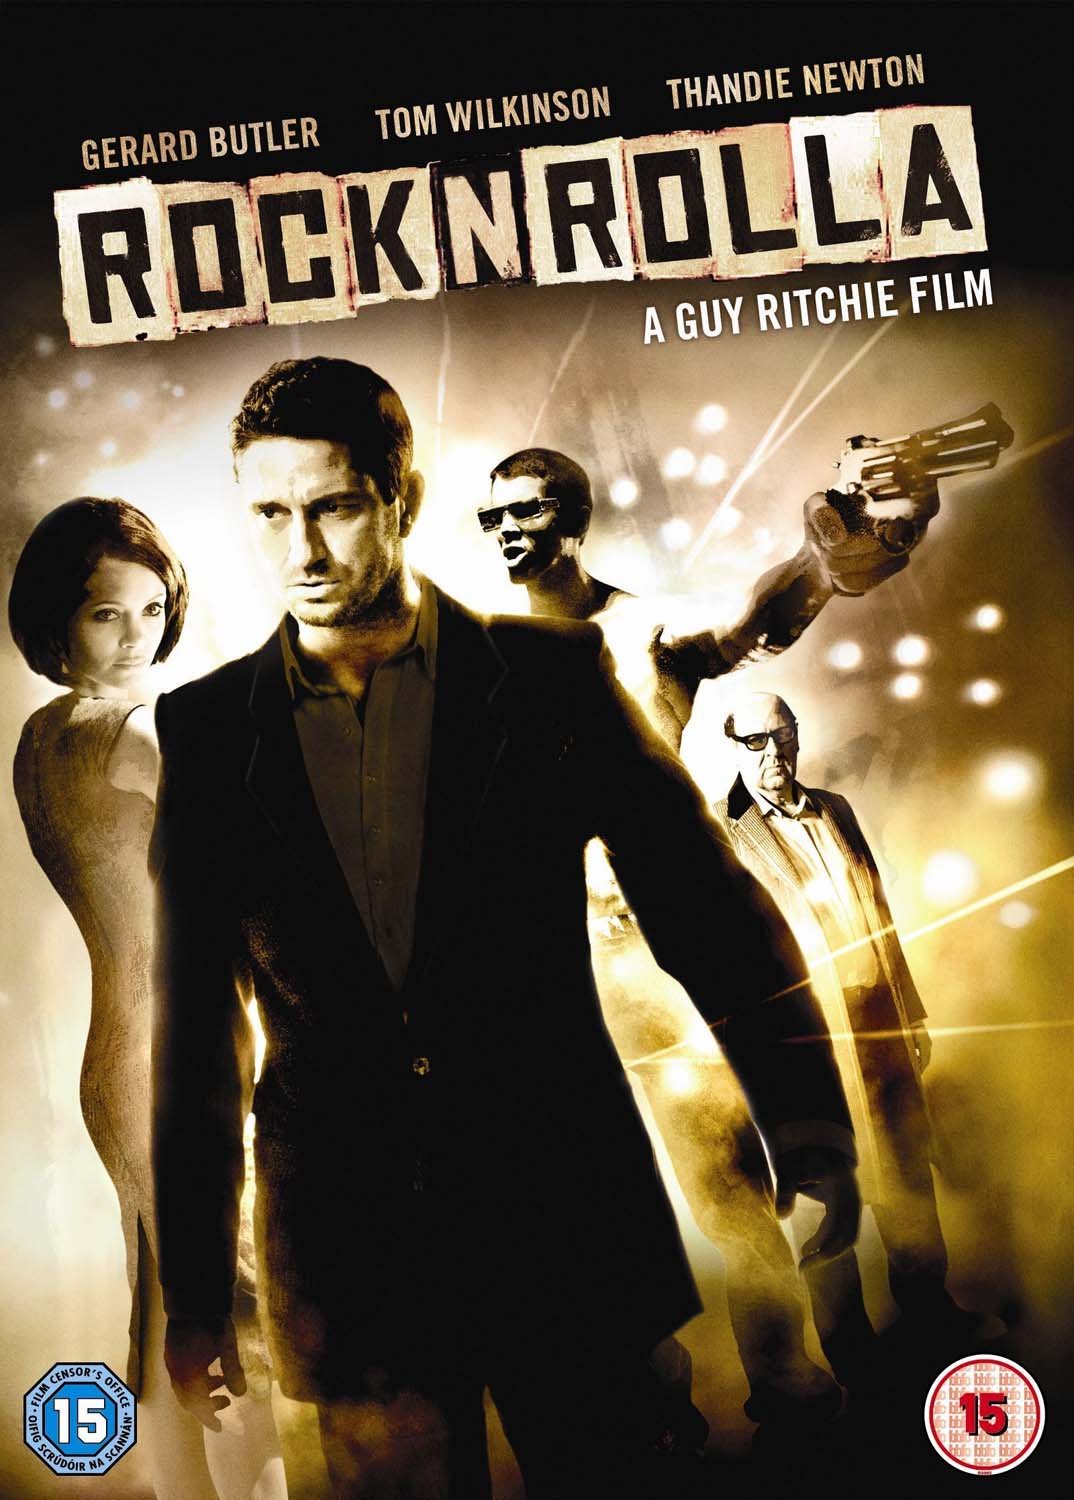 Stiahni si Filmy CZ/SK dabing RocknRolla (2008)(CZ)[1080p] = CSFD 77%